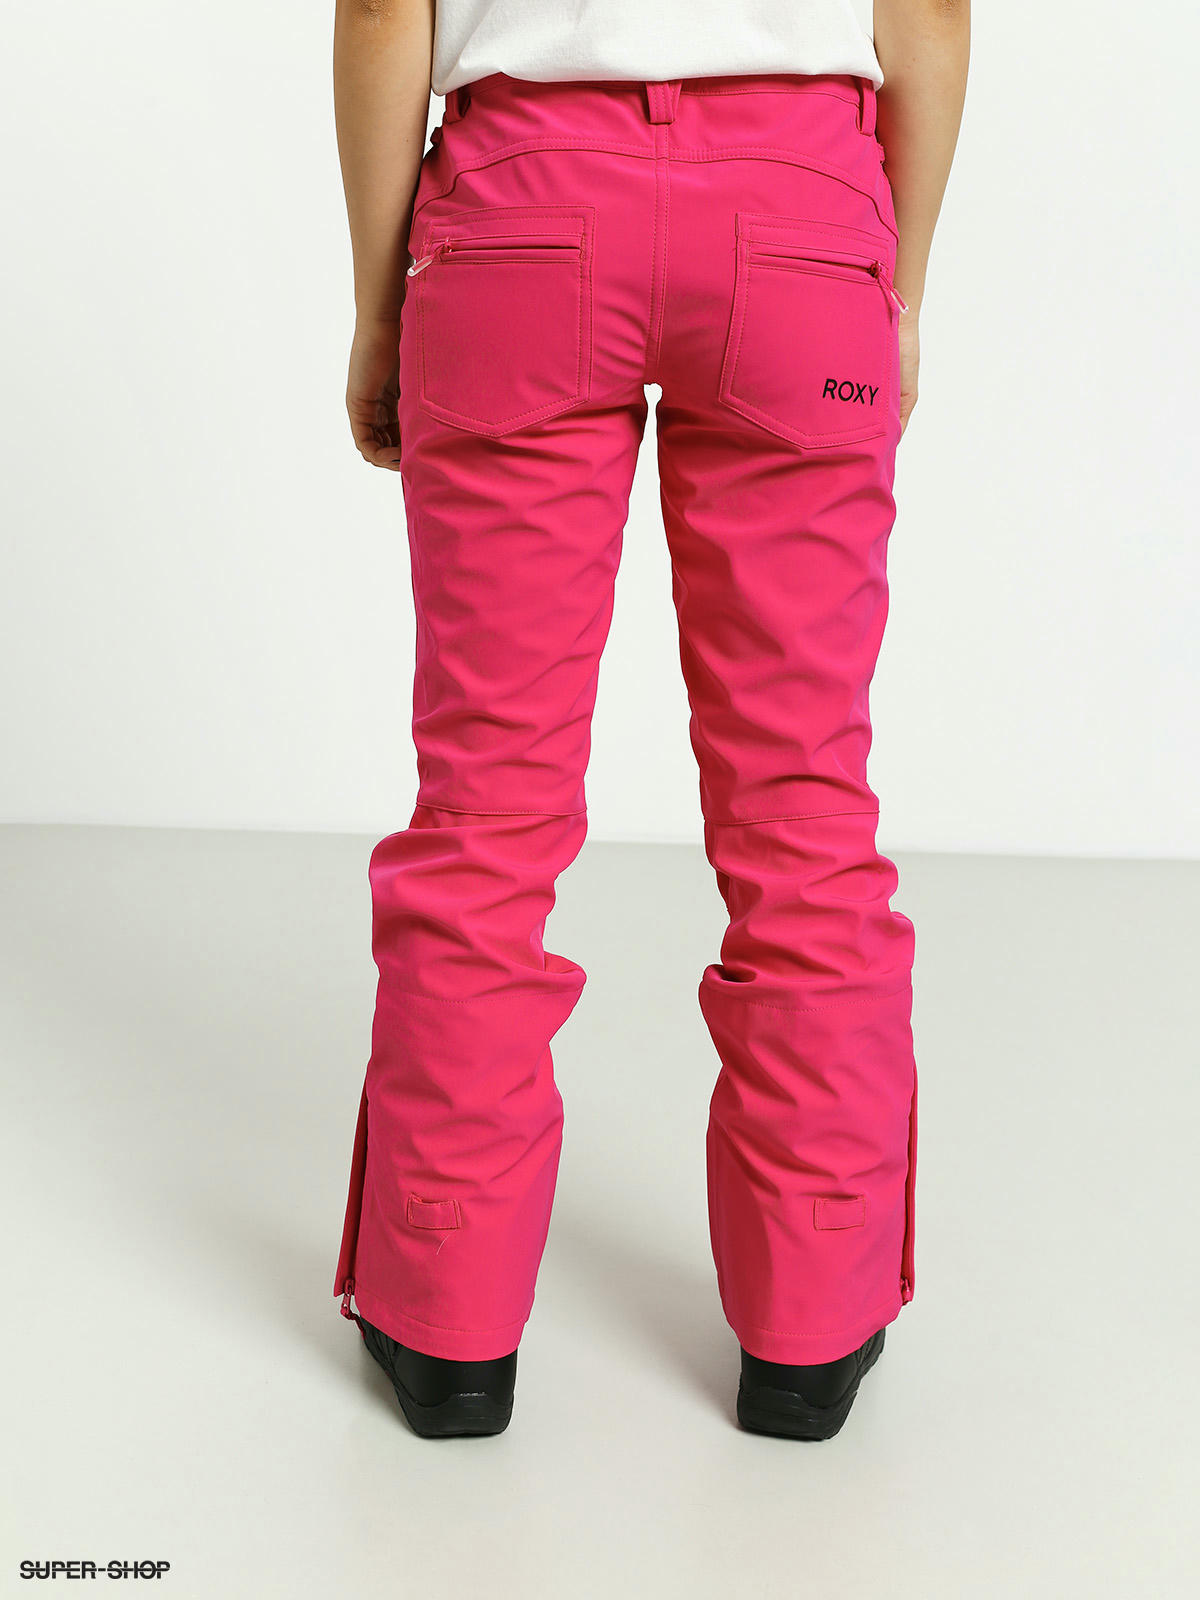 Roxy Creek Snowboard pants Wmn (beetroot pink)